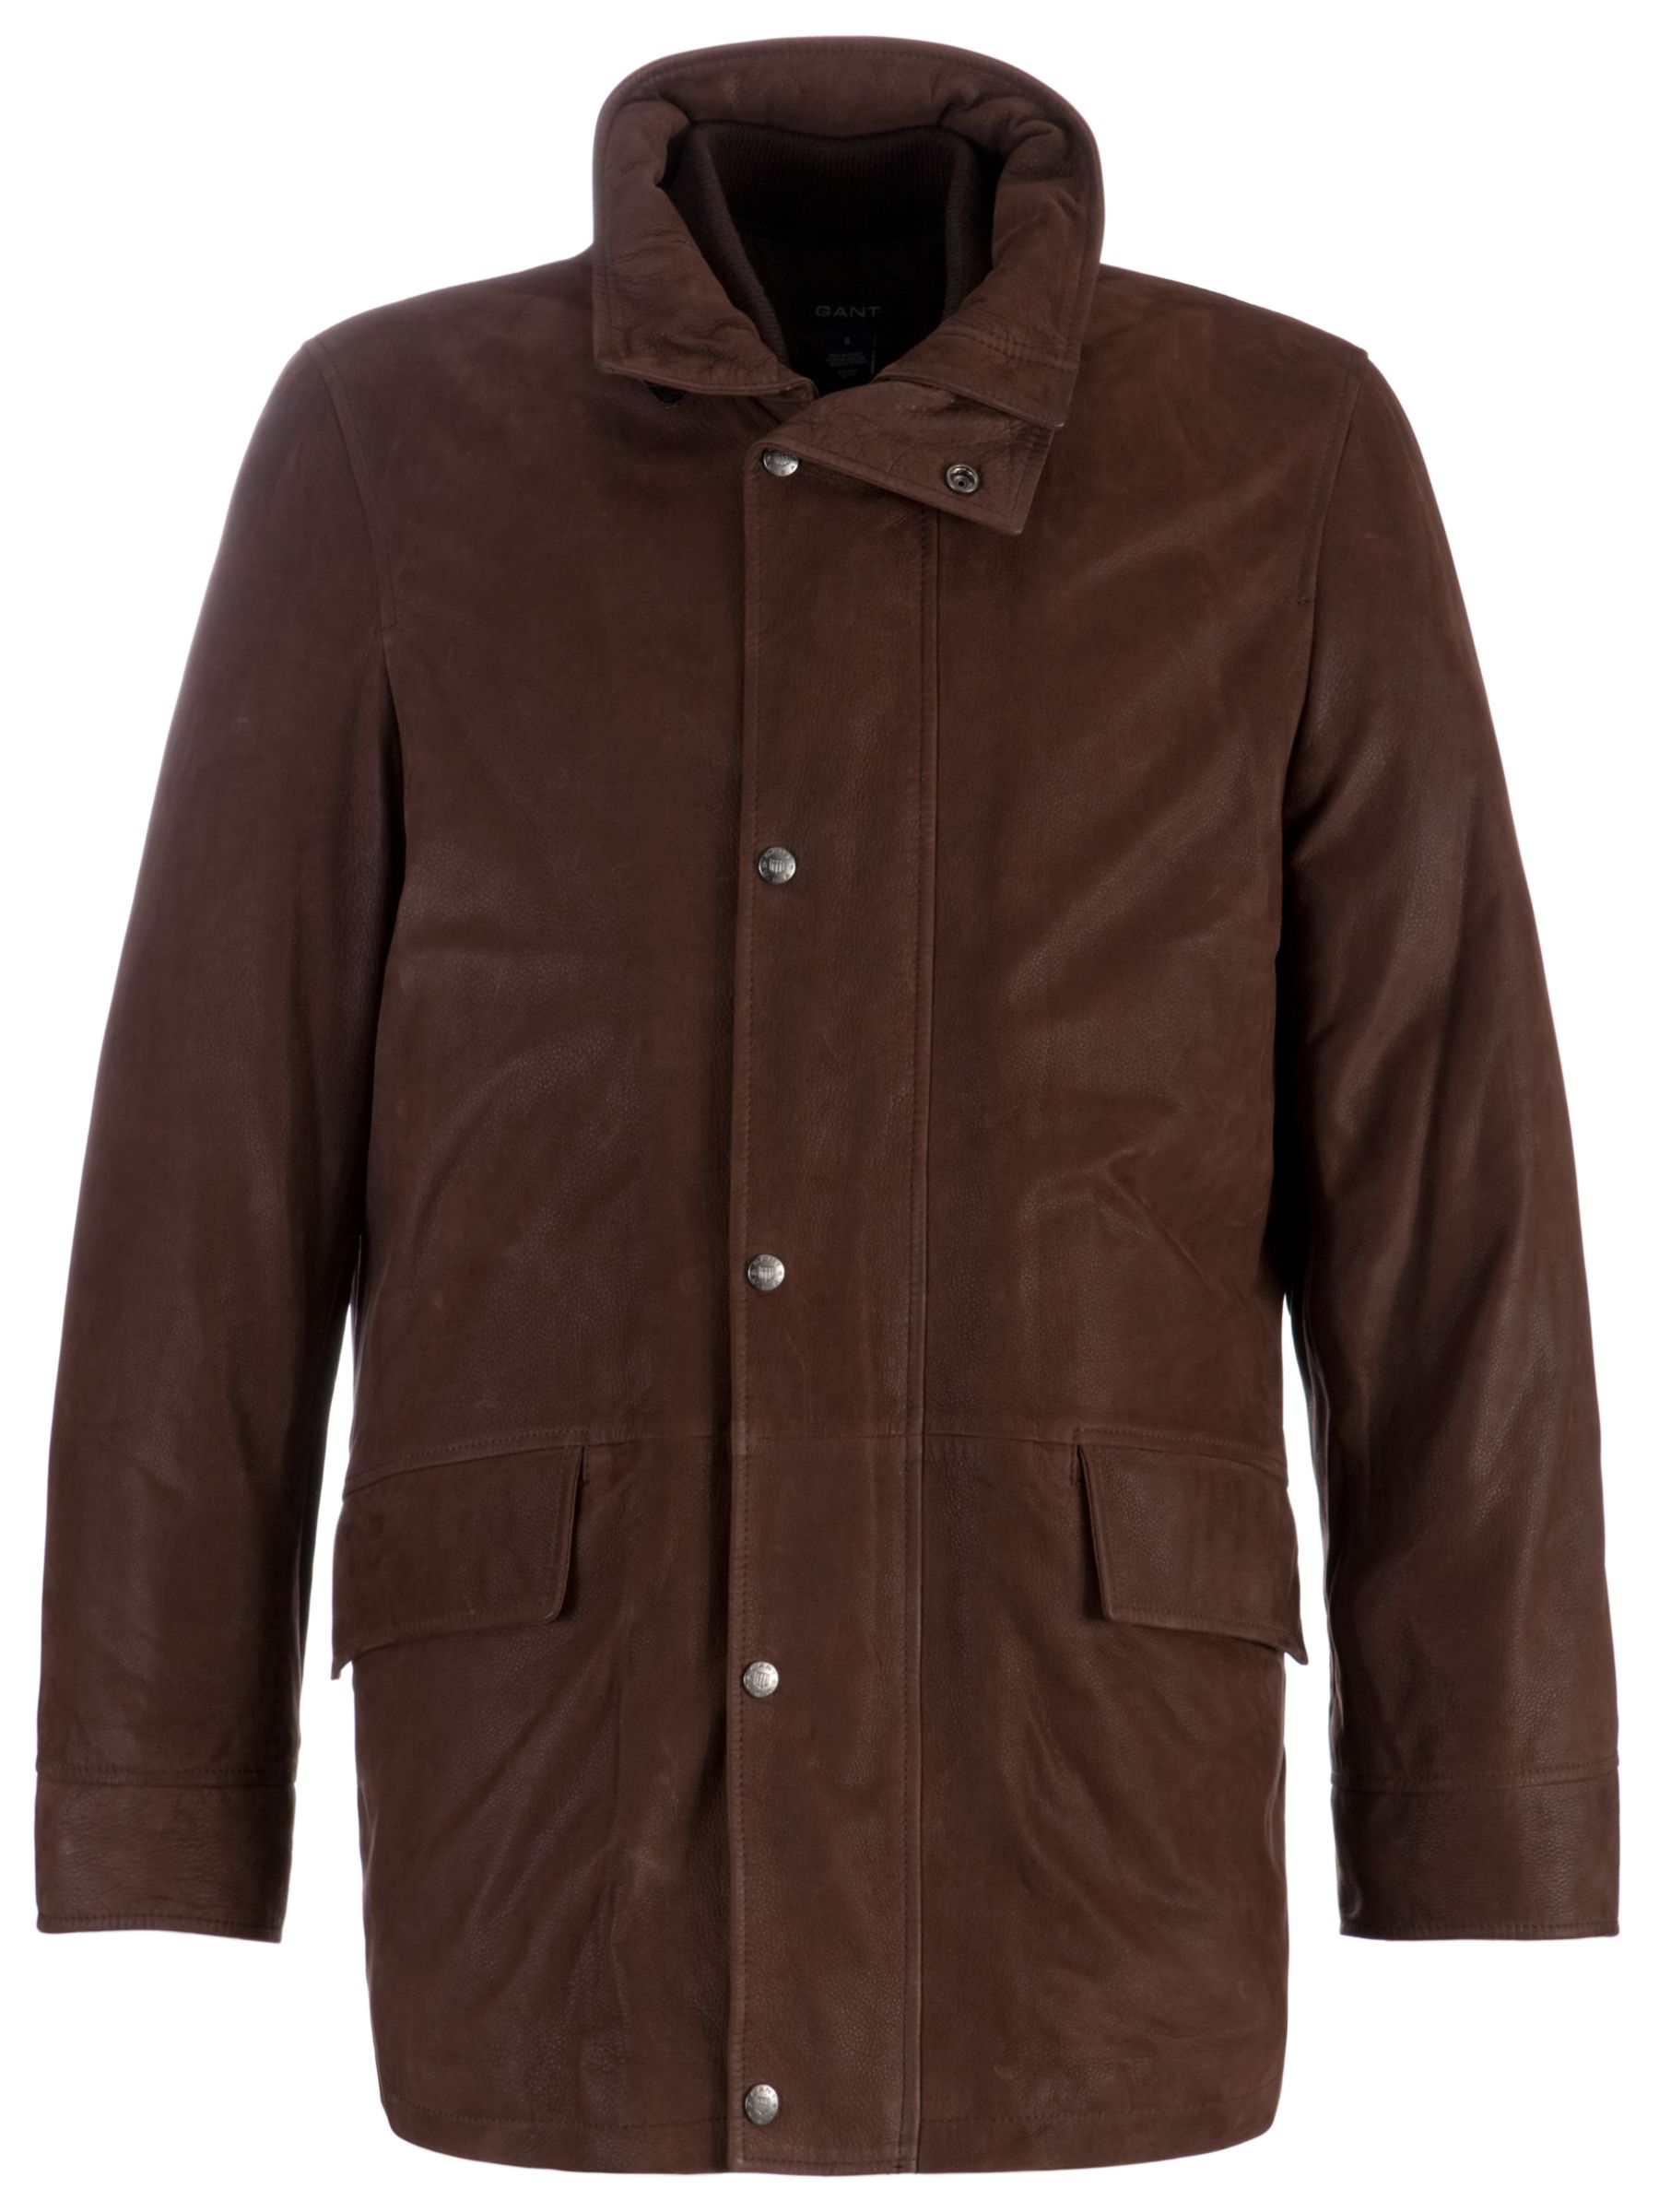 Gant Leather Double Decker Coat, Brown at John Lewis